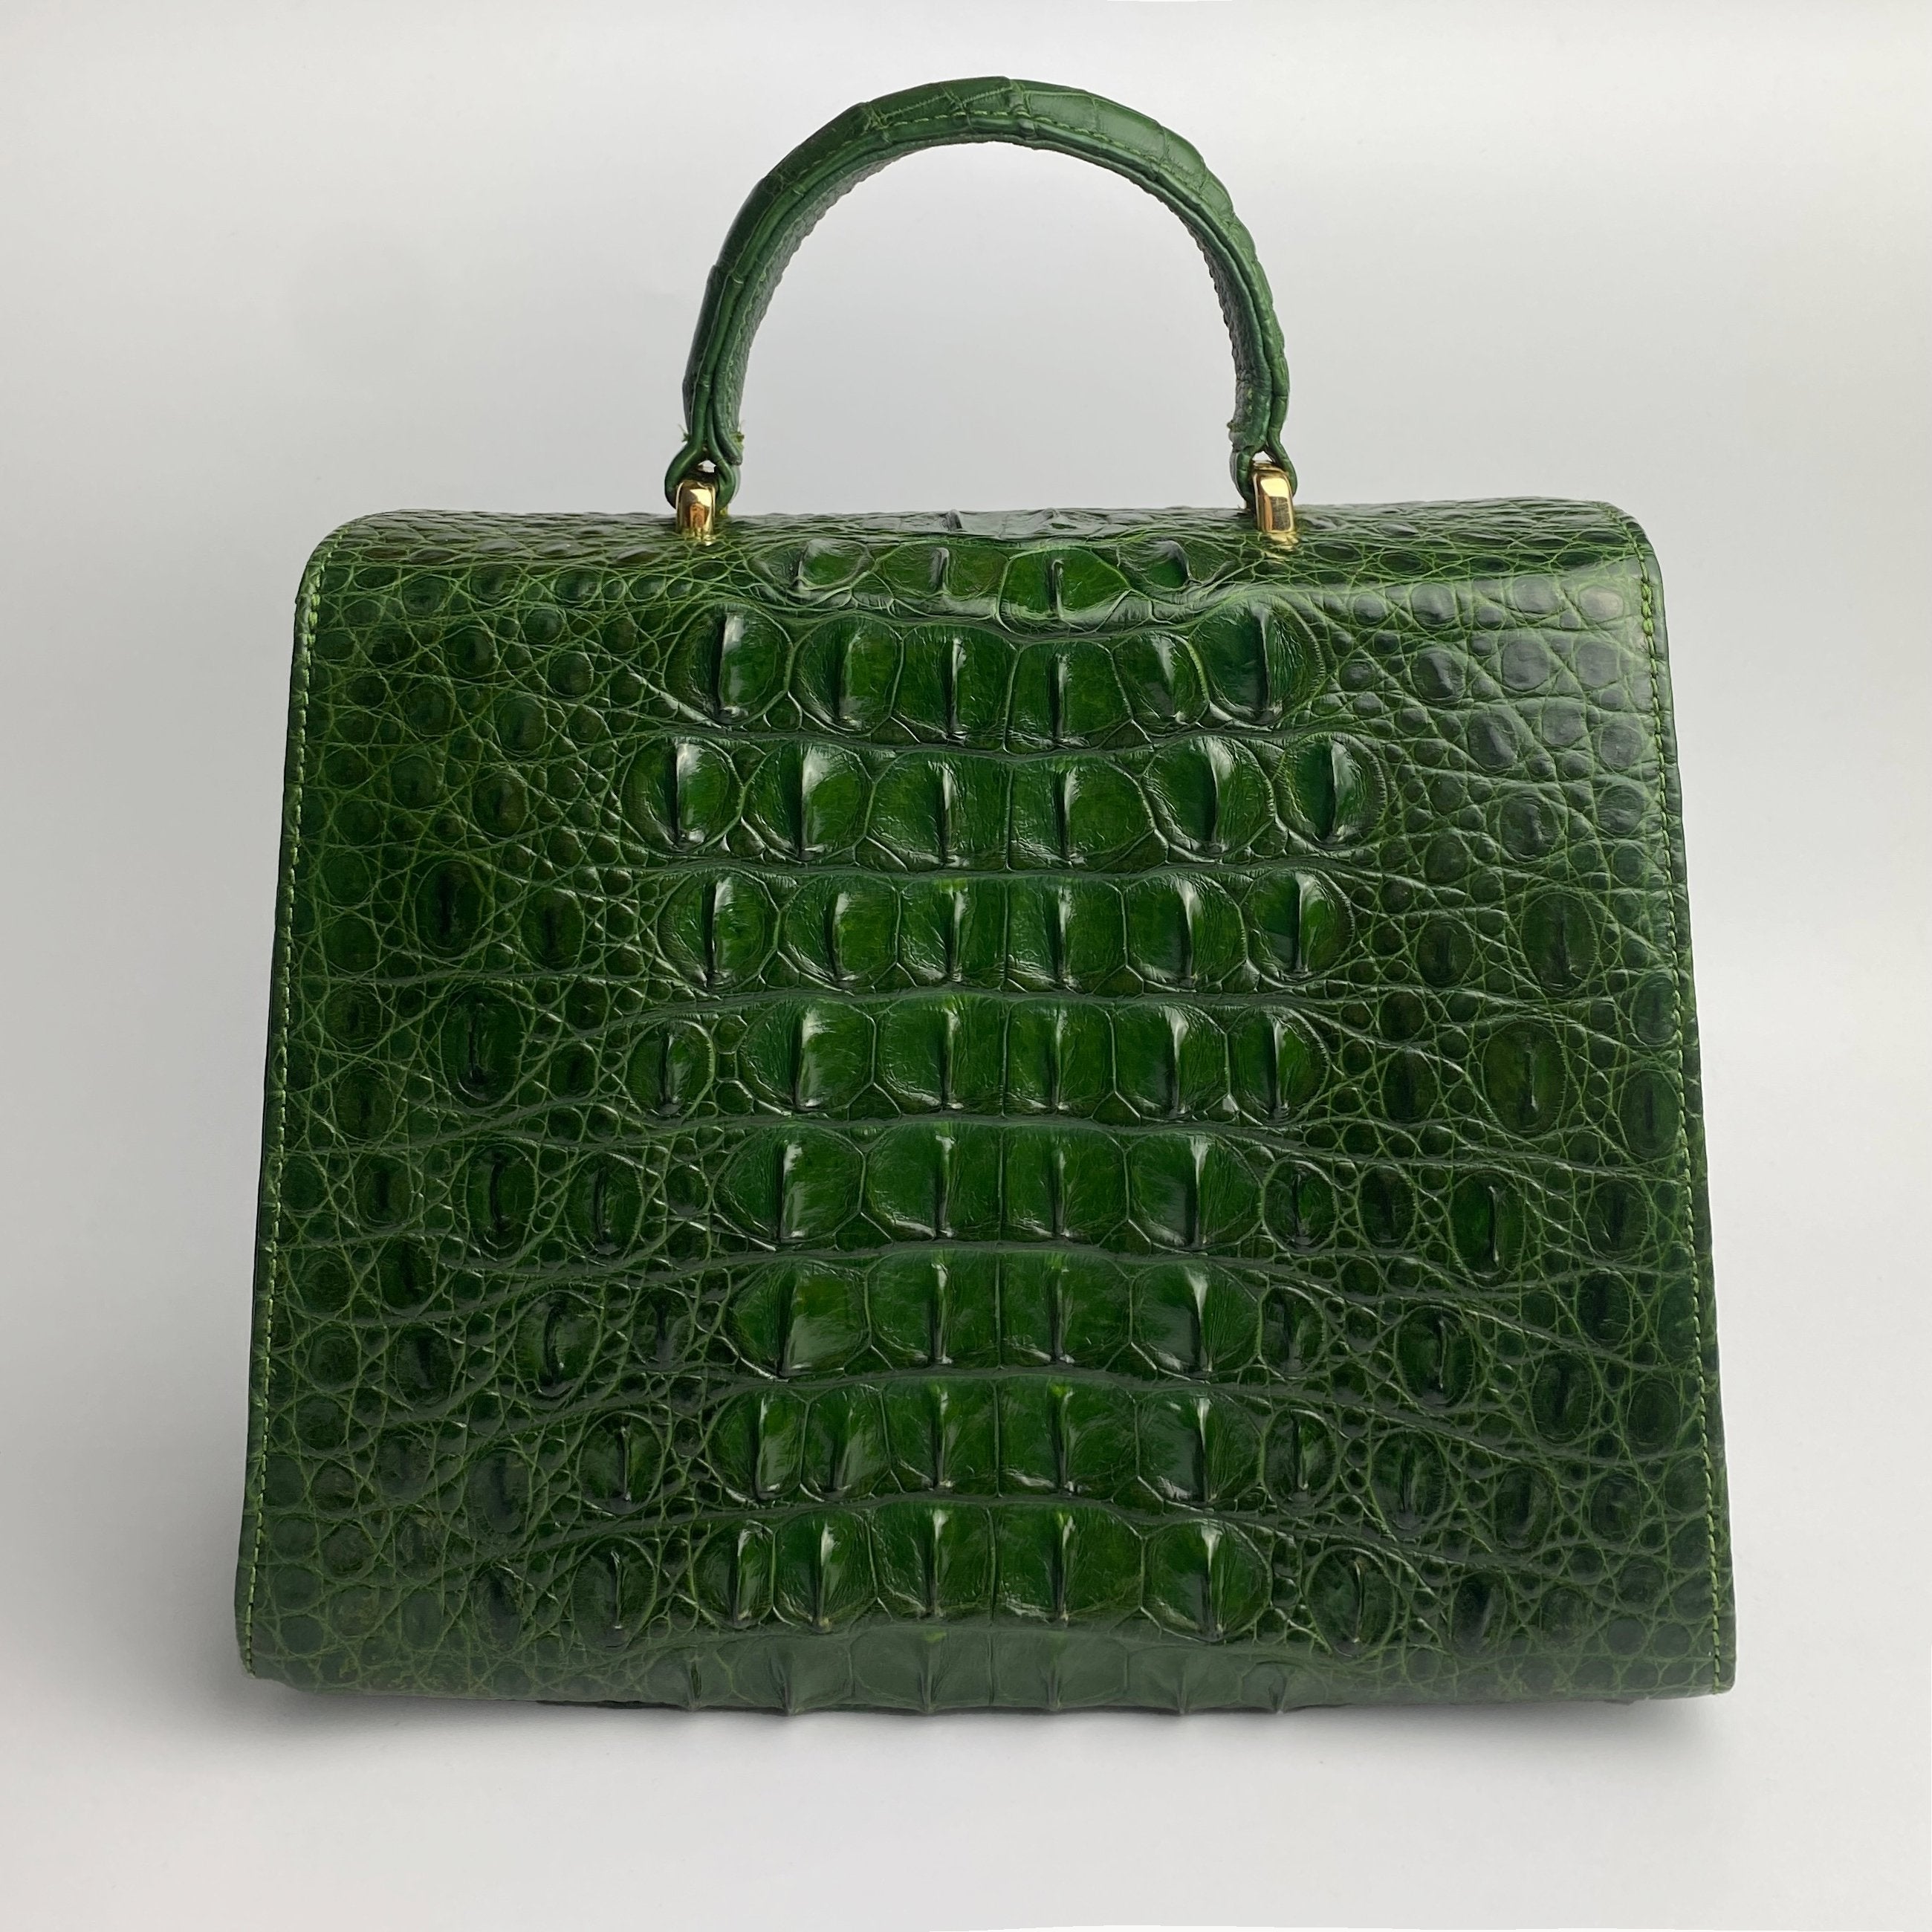 Women Crocodile Handbags Top Handle Alligator Leather Shoulder Messenger Bag Lady Fashion Daily Totes - Green - Vinacreations